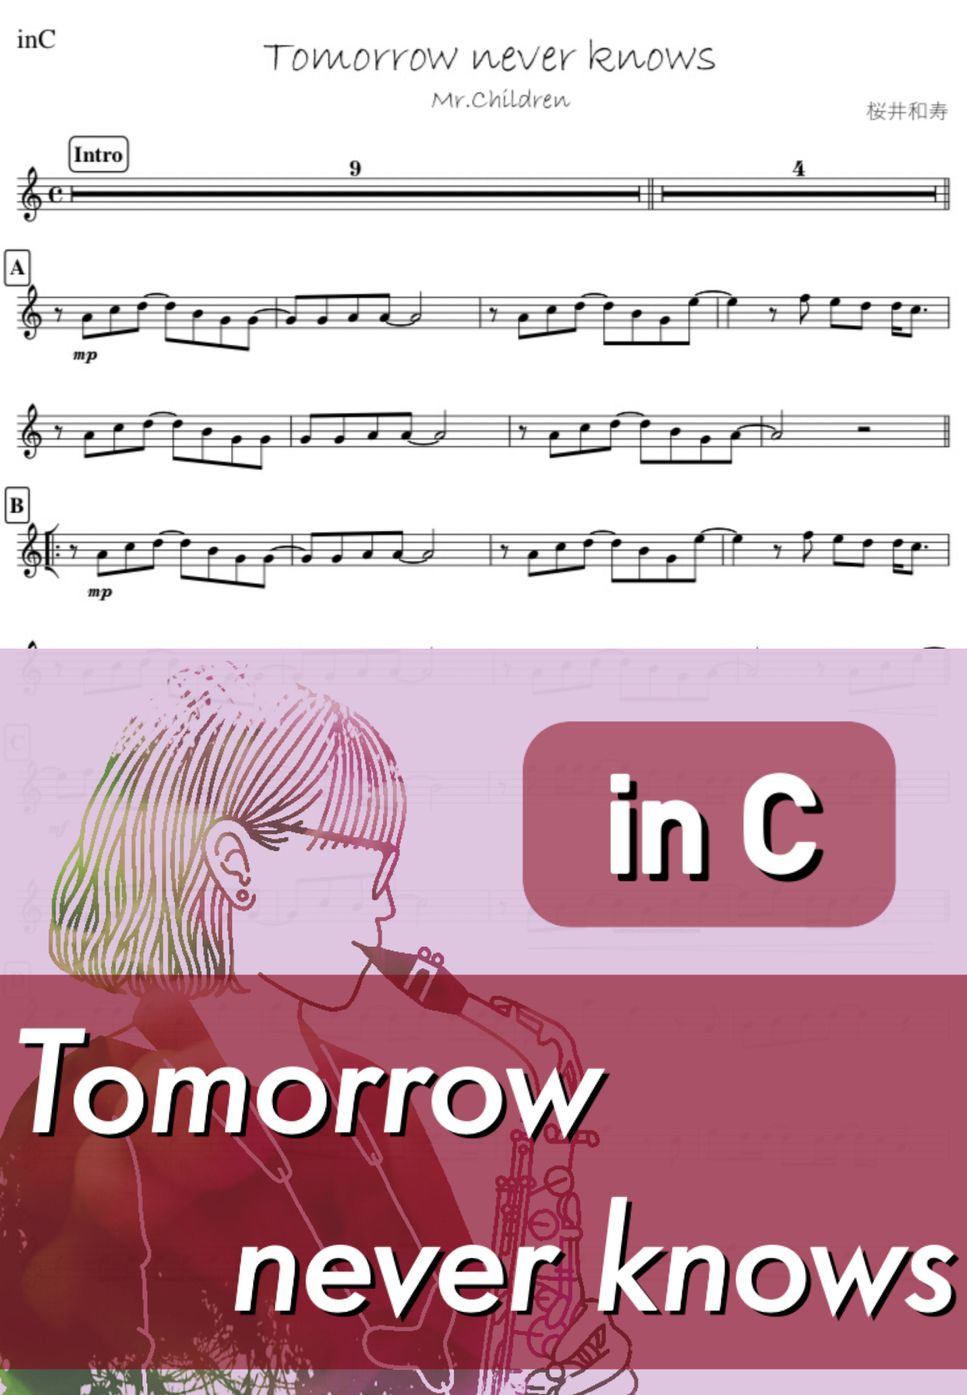 Mr.Children - Tomorrow never knows (C) by kanamusic